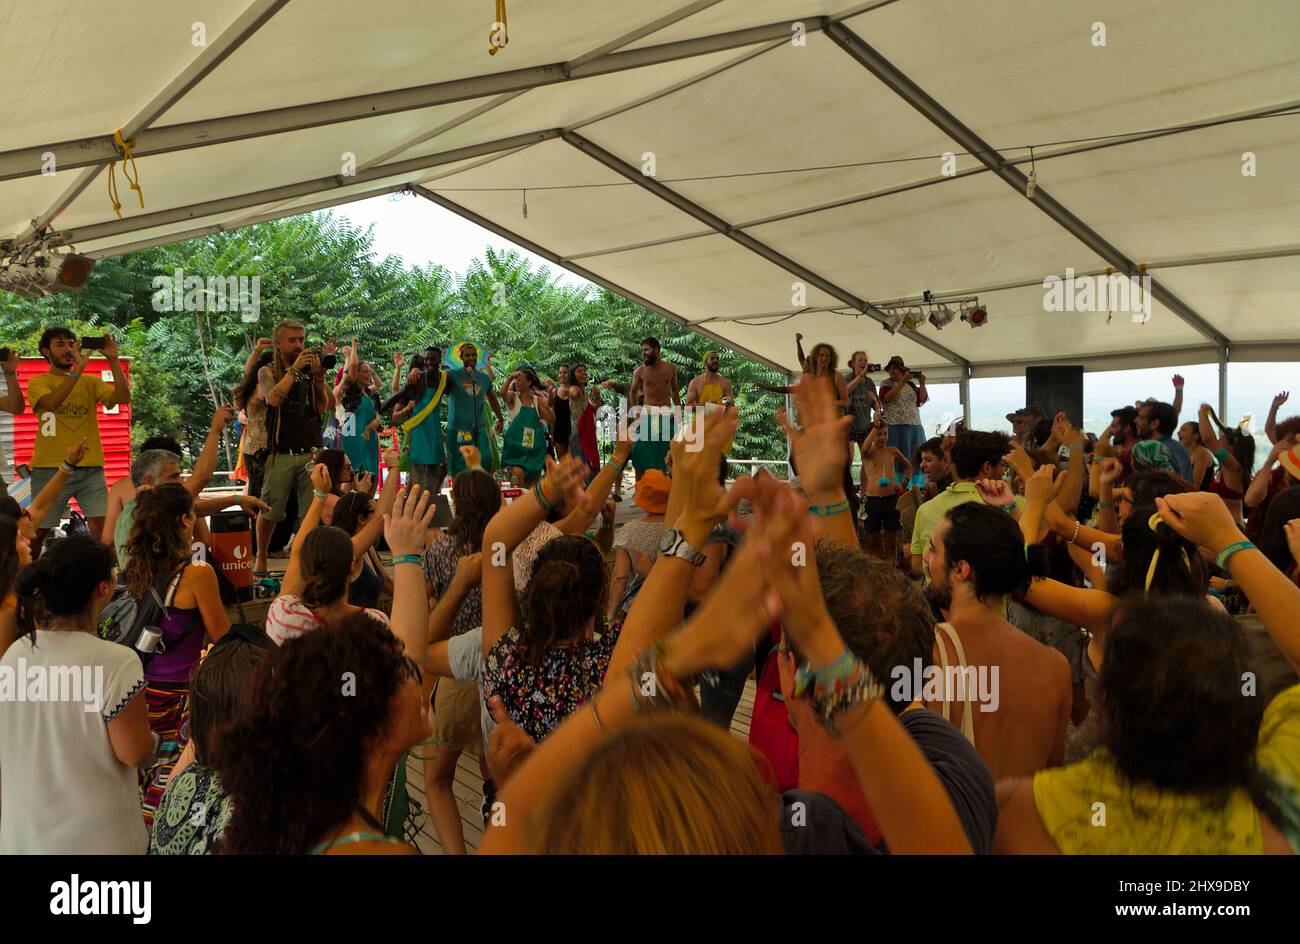 Andanças Festival 2018, August 05/18 Closing March and Celebration Ceremony. Castelo de Vide, Portugal Stock Photo